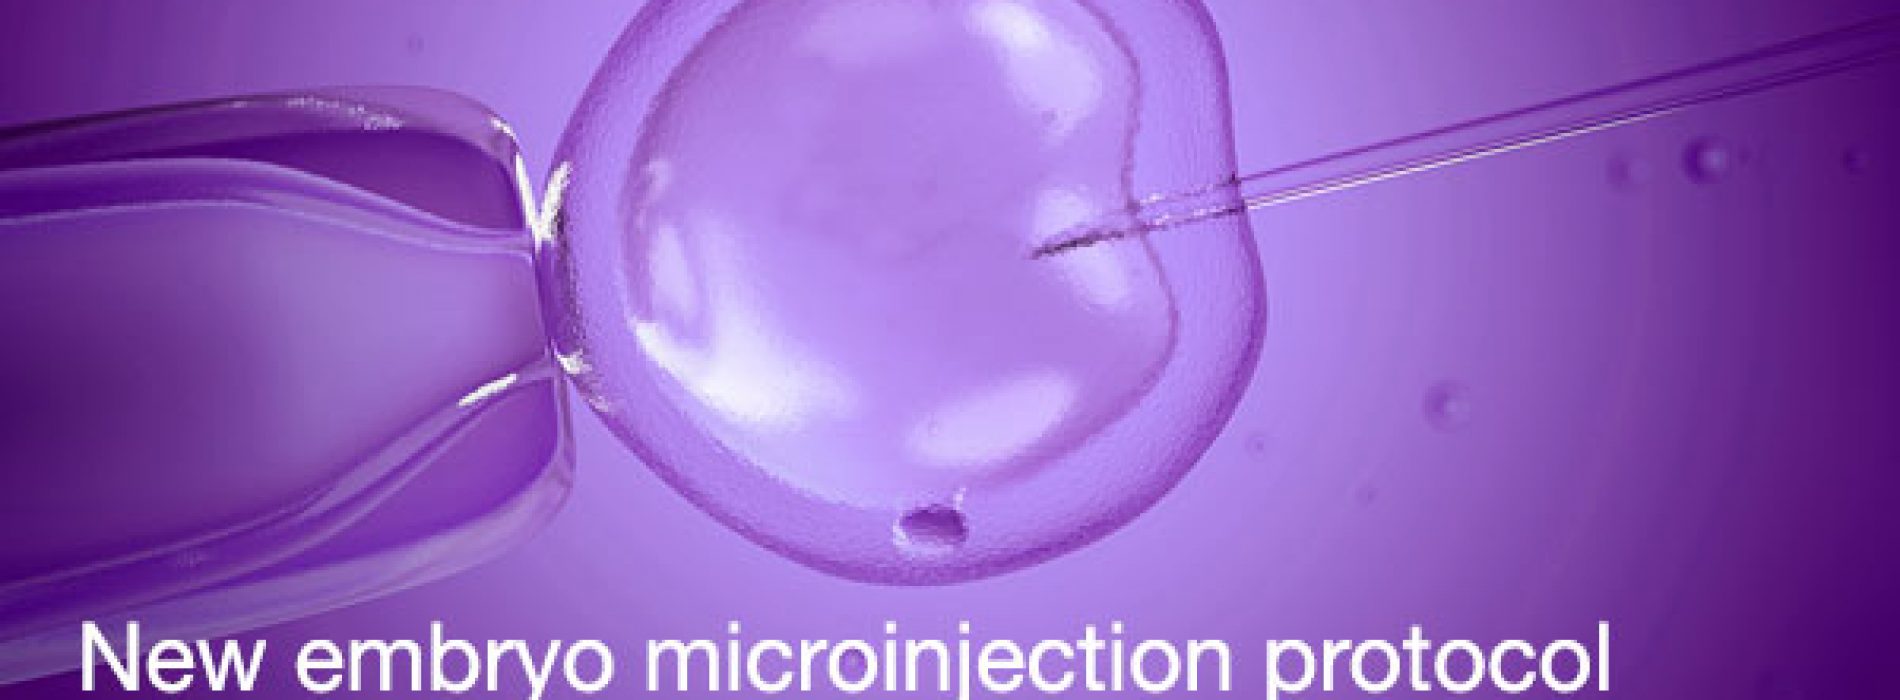 Free protocol: CRISPR embryo microinjection